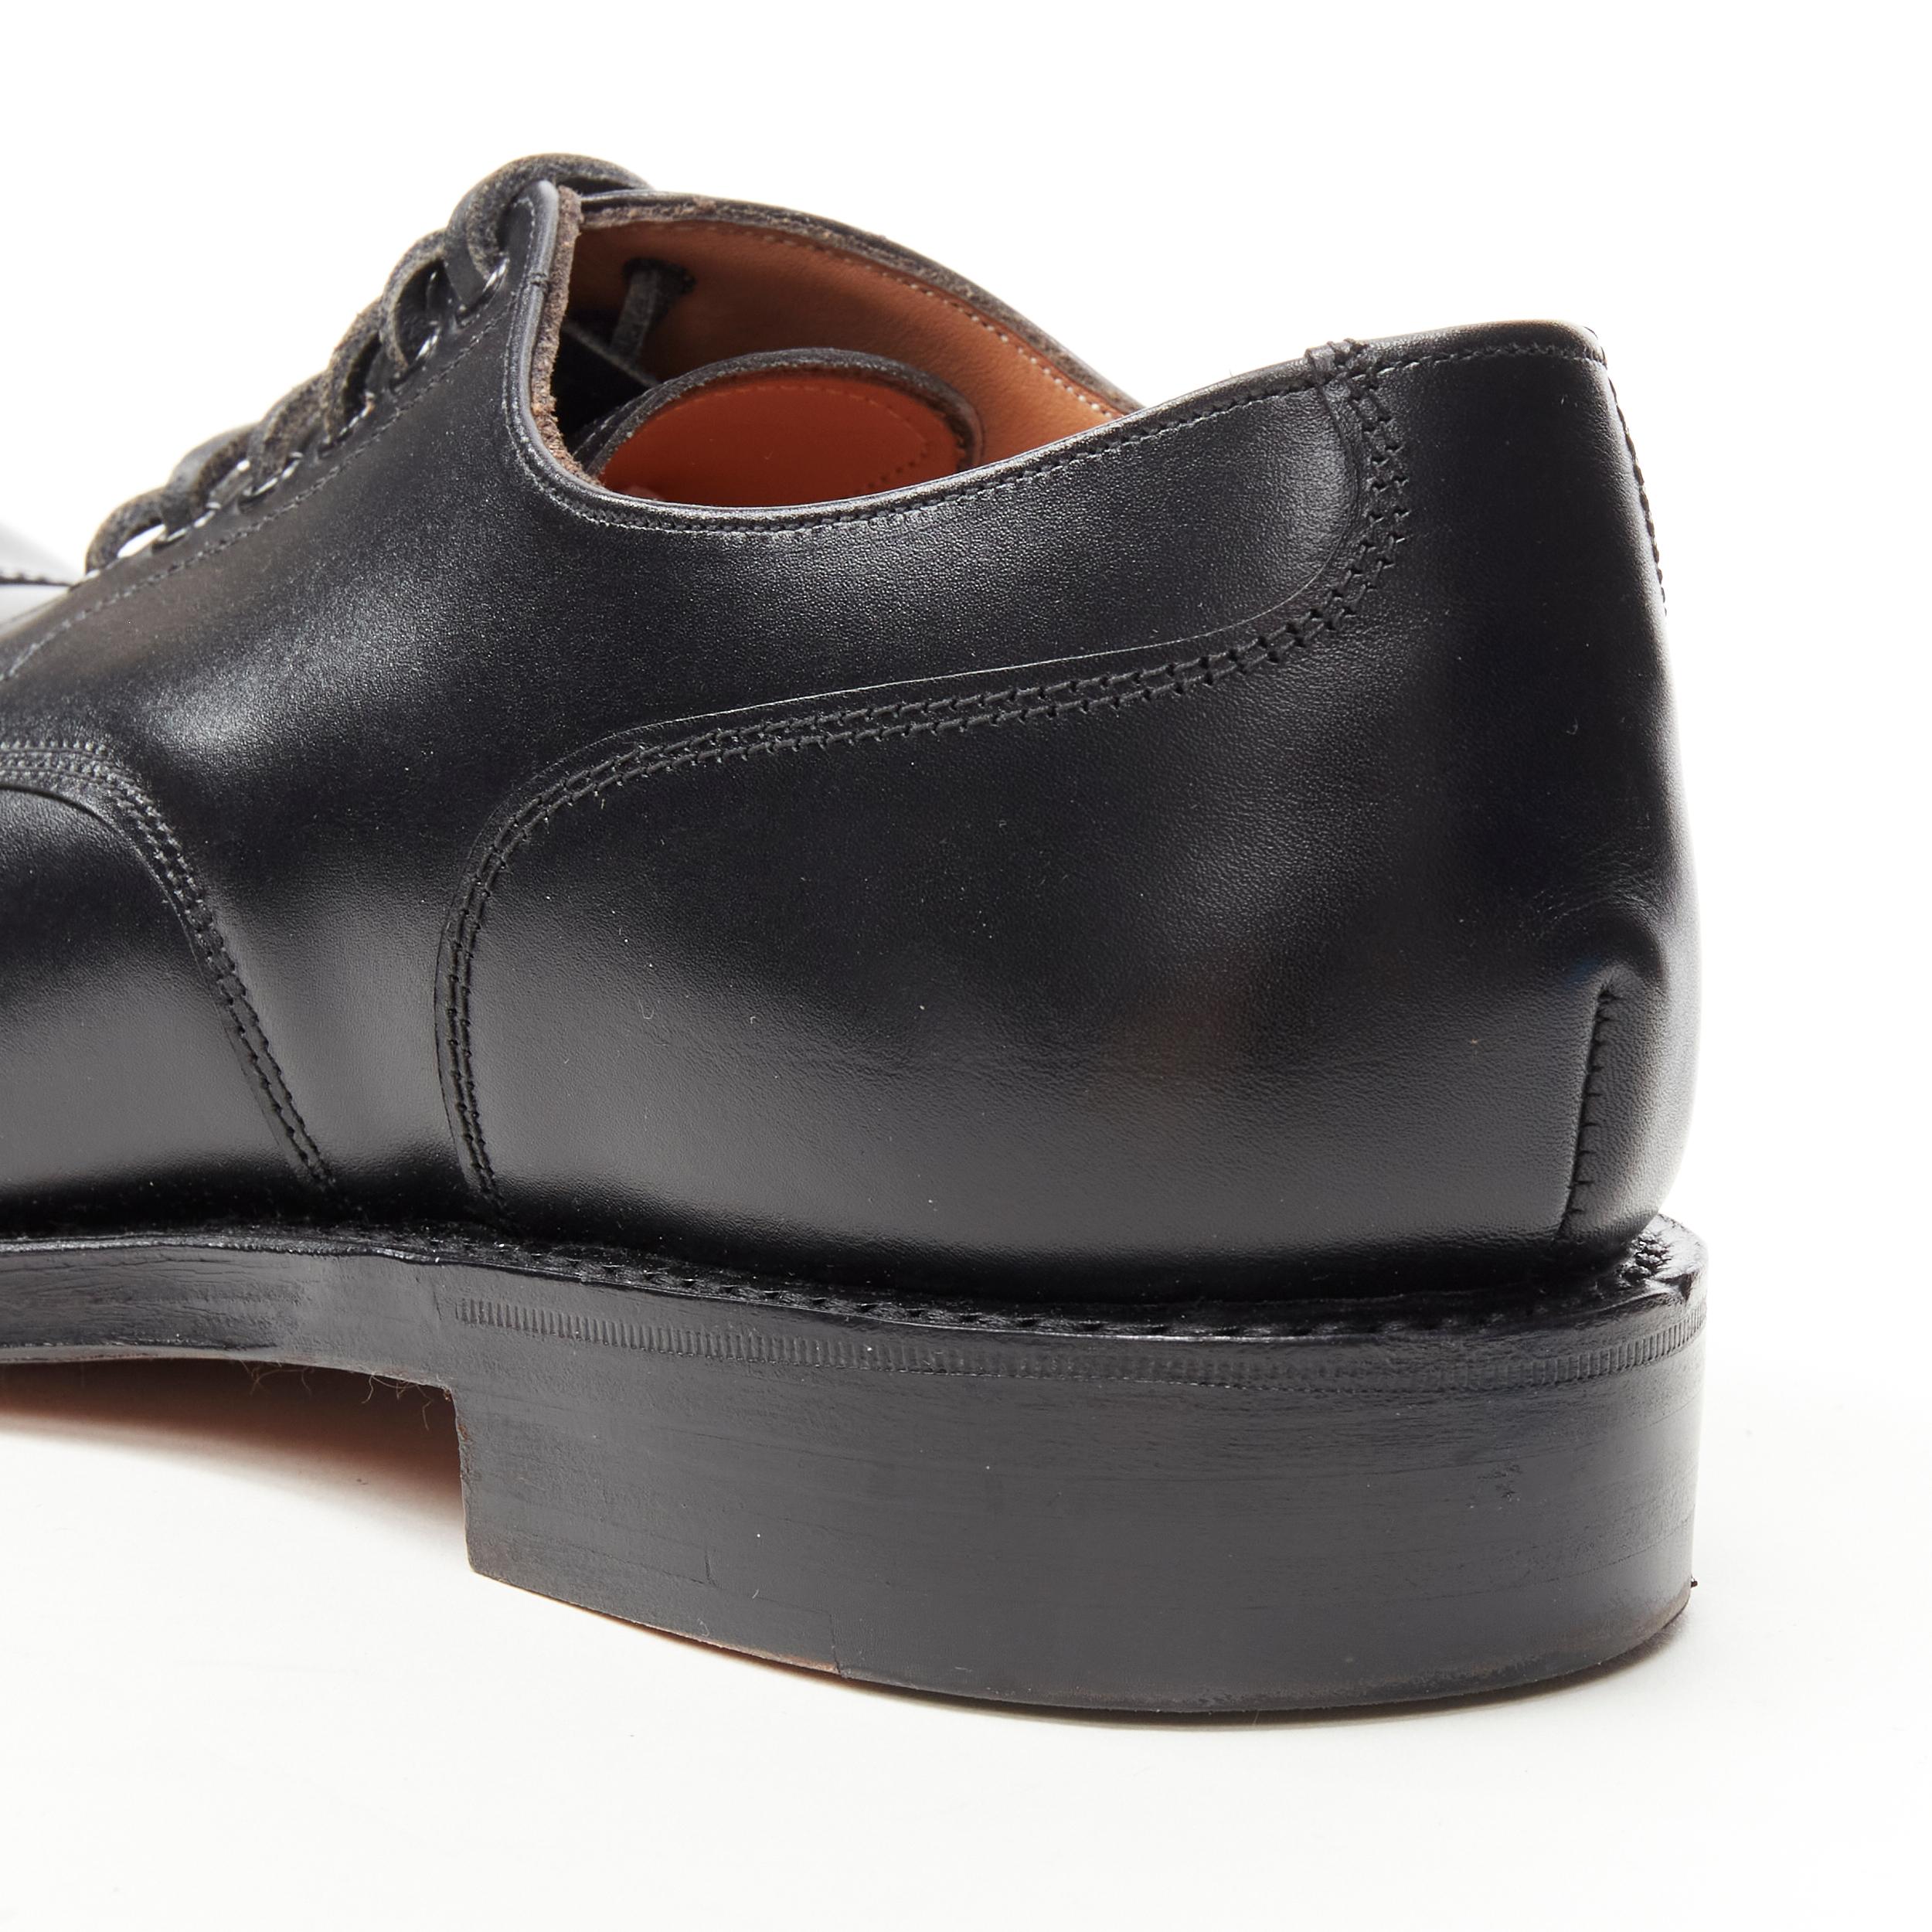 Men's new PAUL HARNDEN SHOEMAKERS black calf leather Welted Derby shoe UK7 EU41